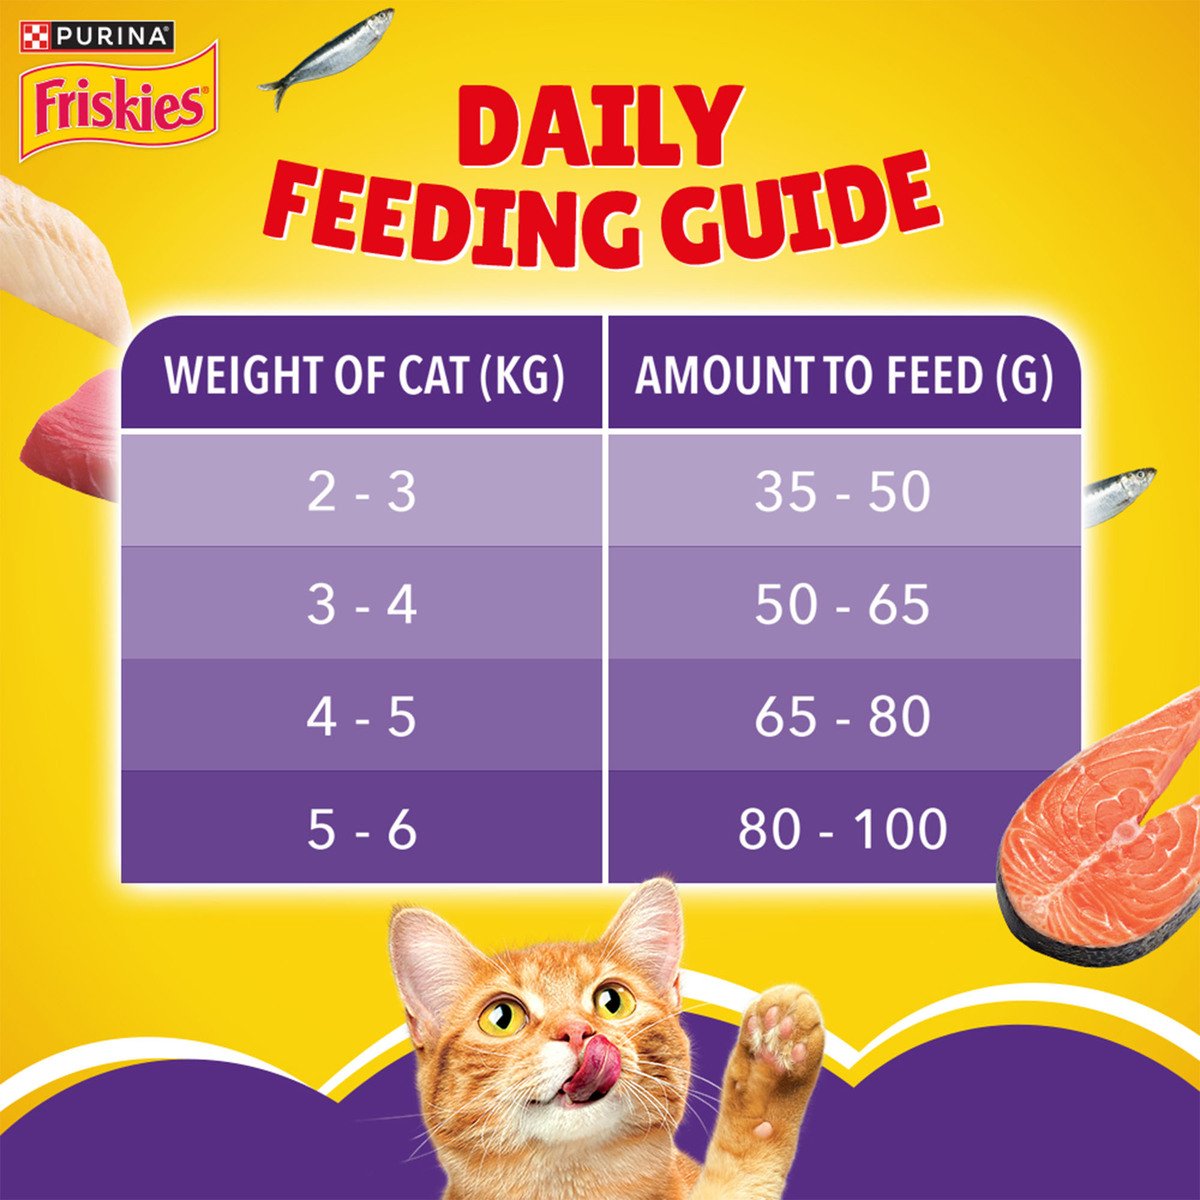 Purina Friskies Cat Food Surfin Favourites Dry Cat Food 1 kg